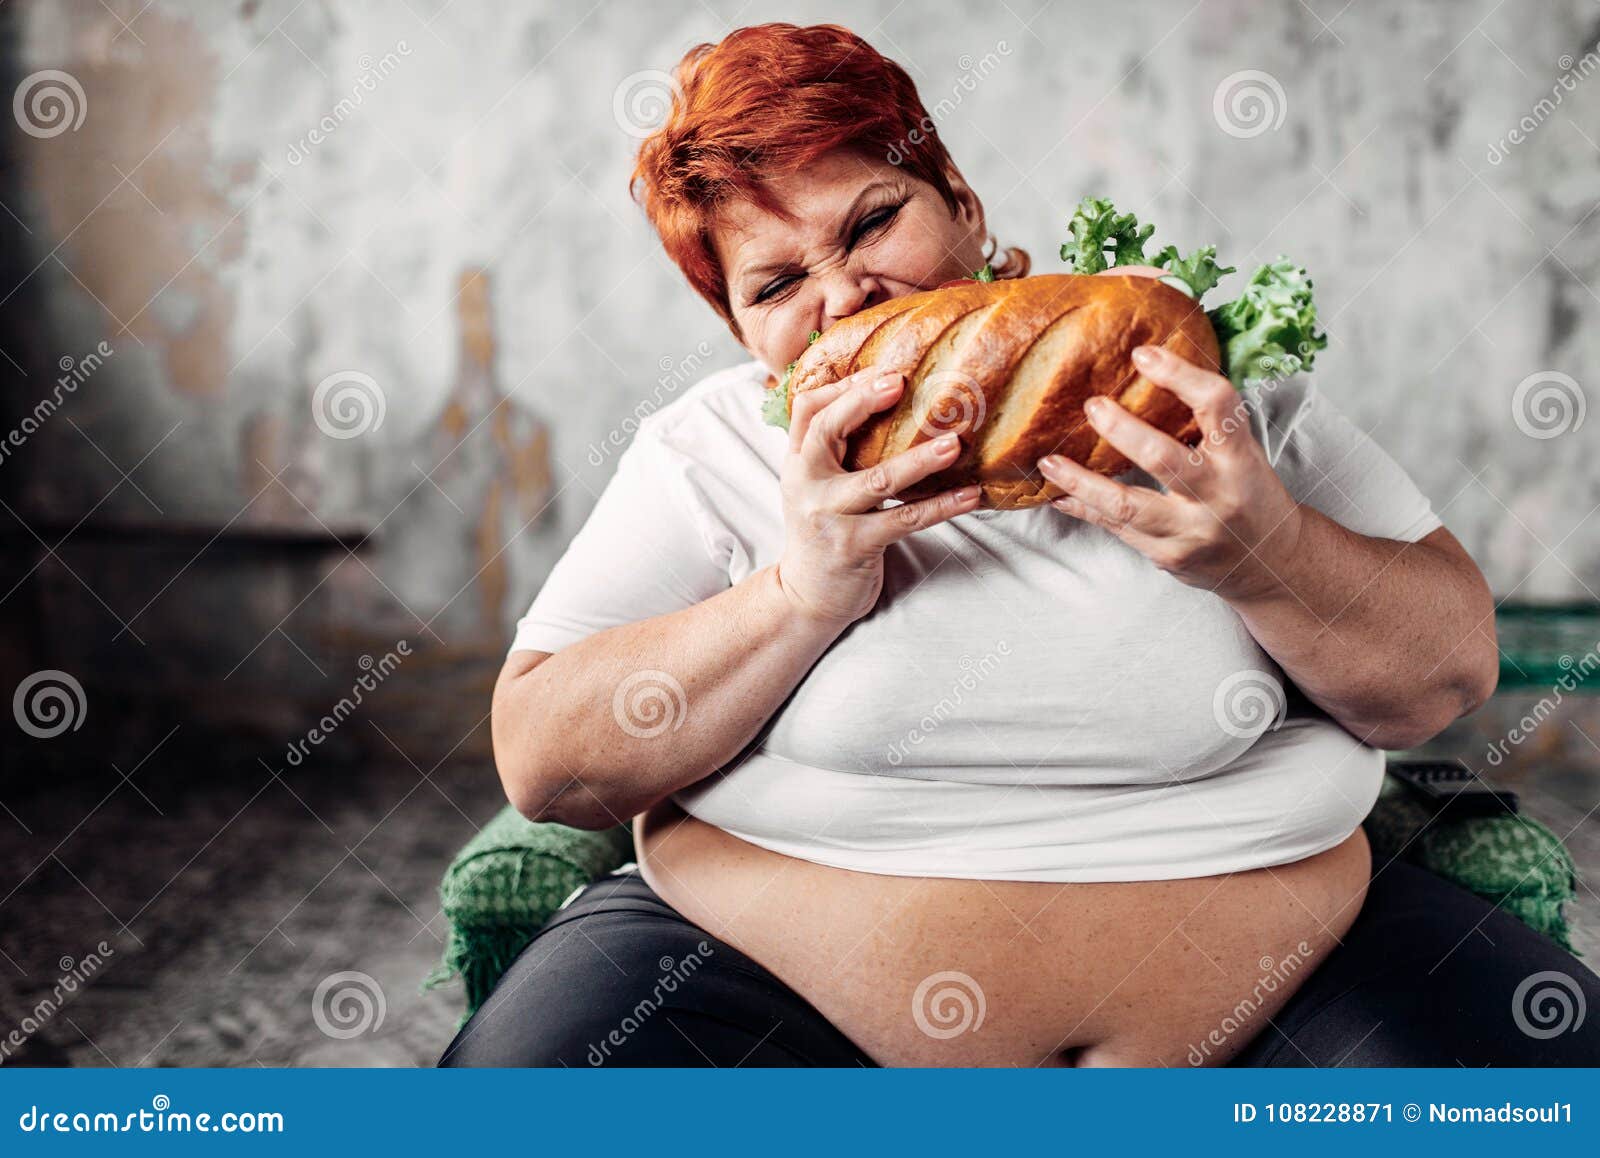 carol lacson share ugly fat woman pics photos